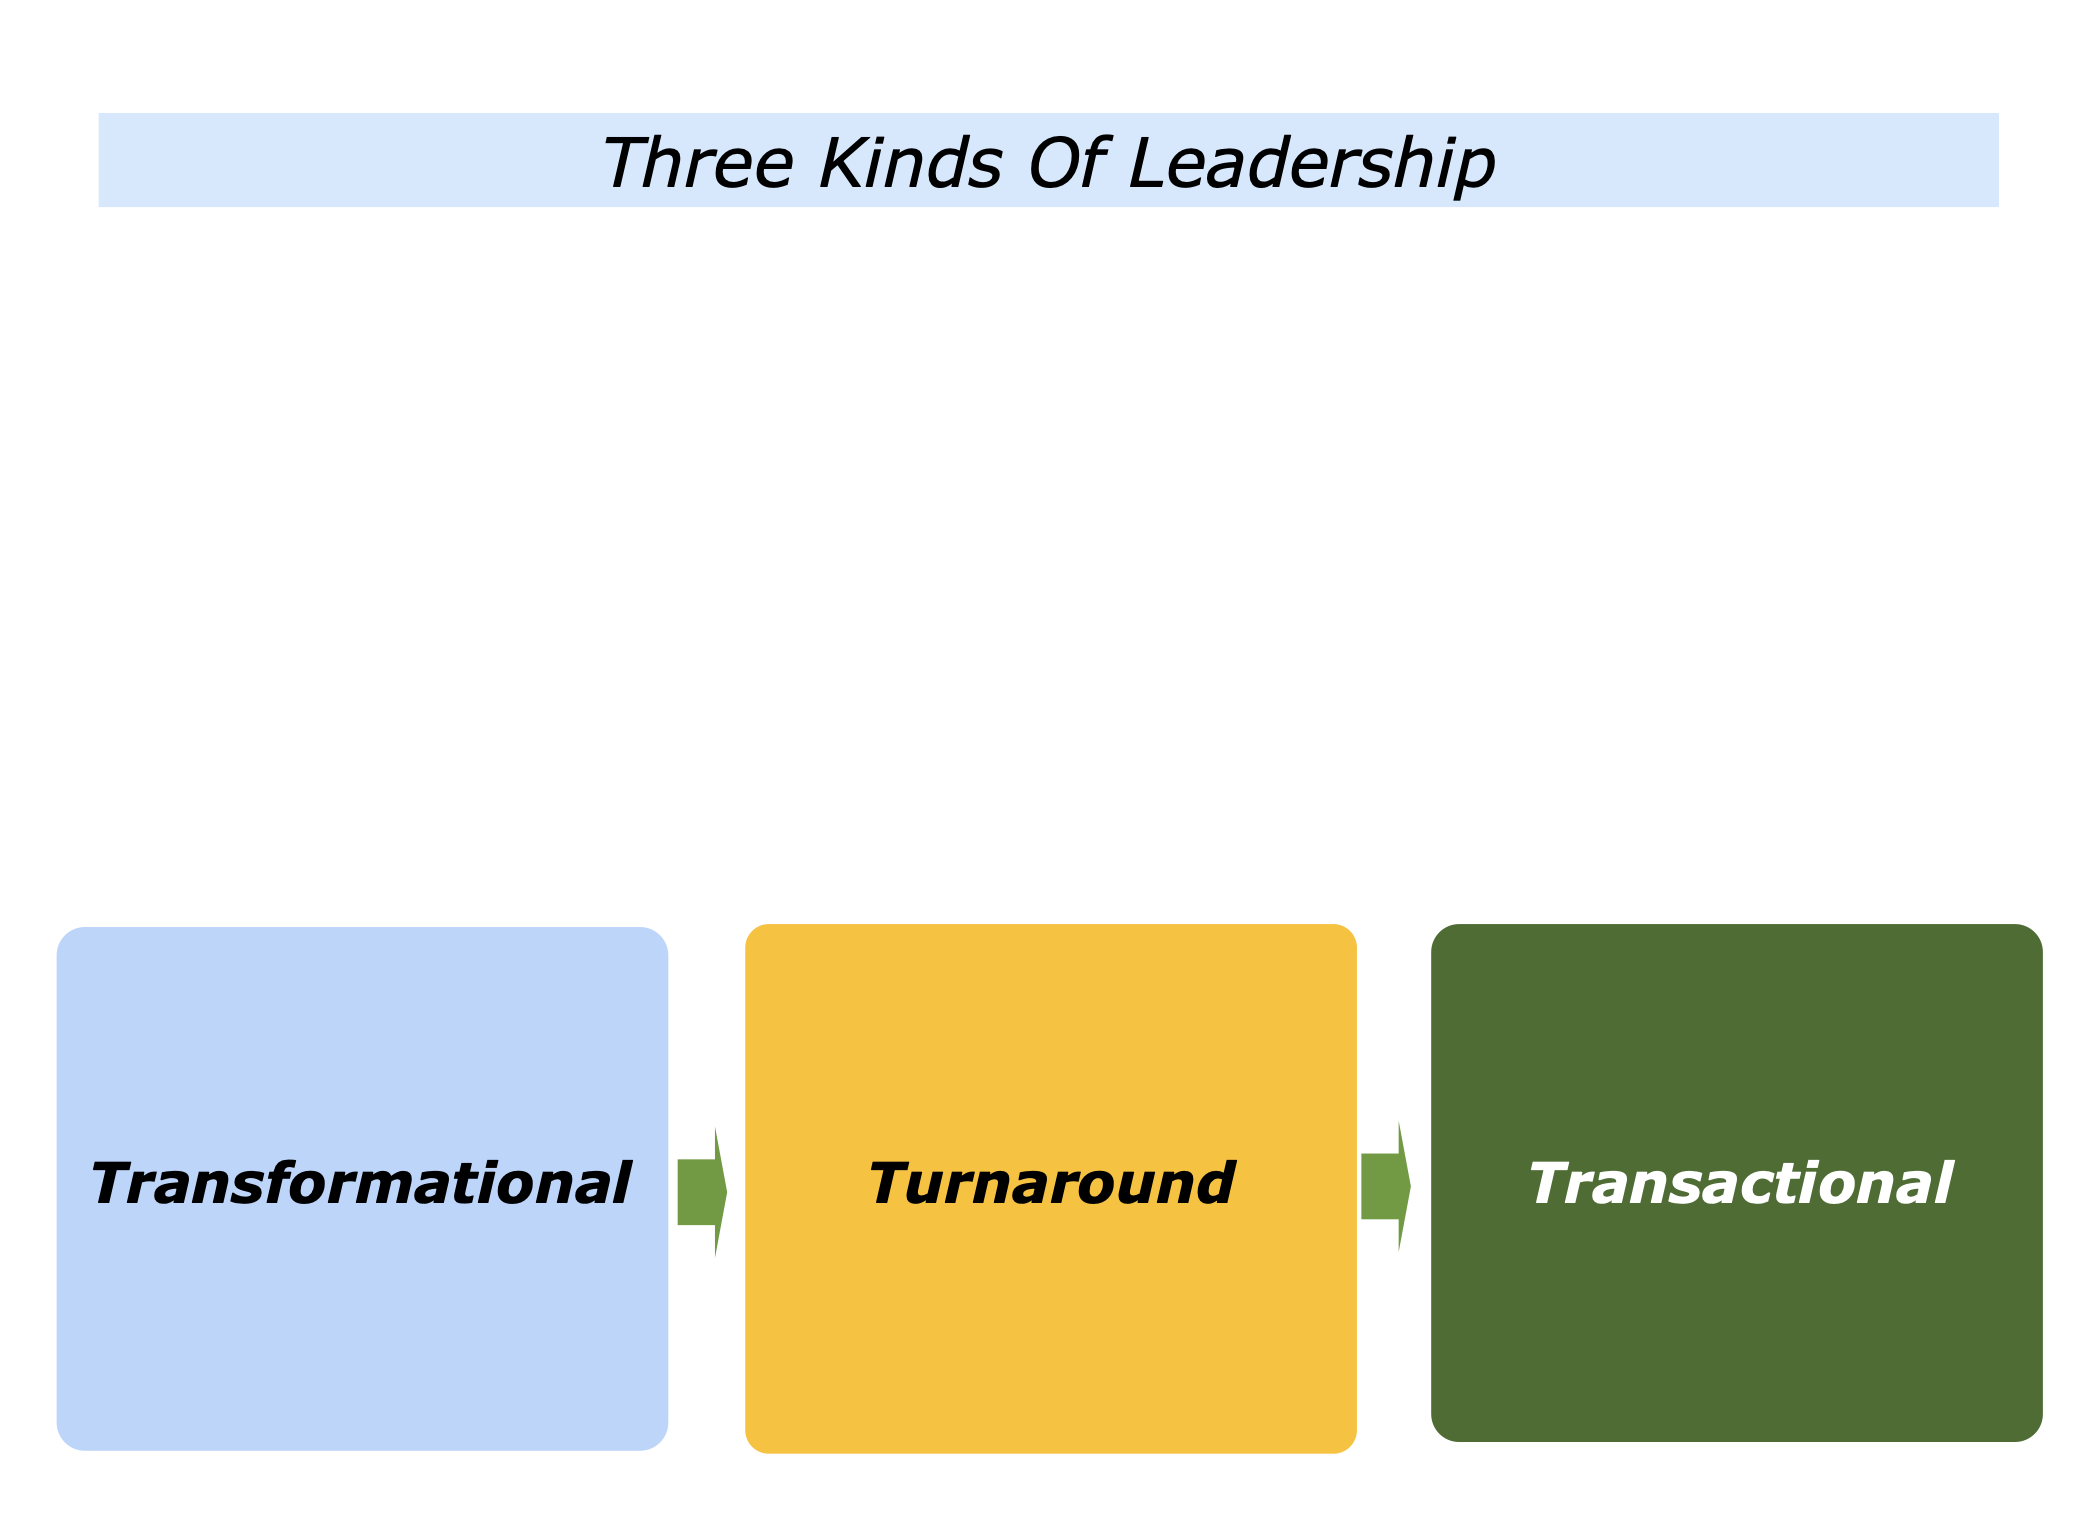 transactional leadership vs transformational leadership